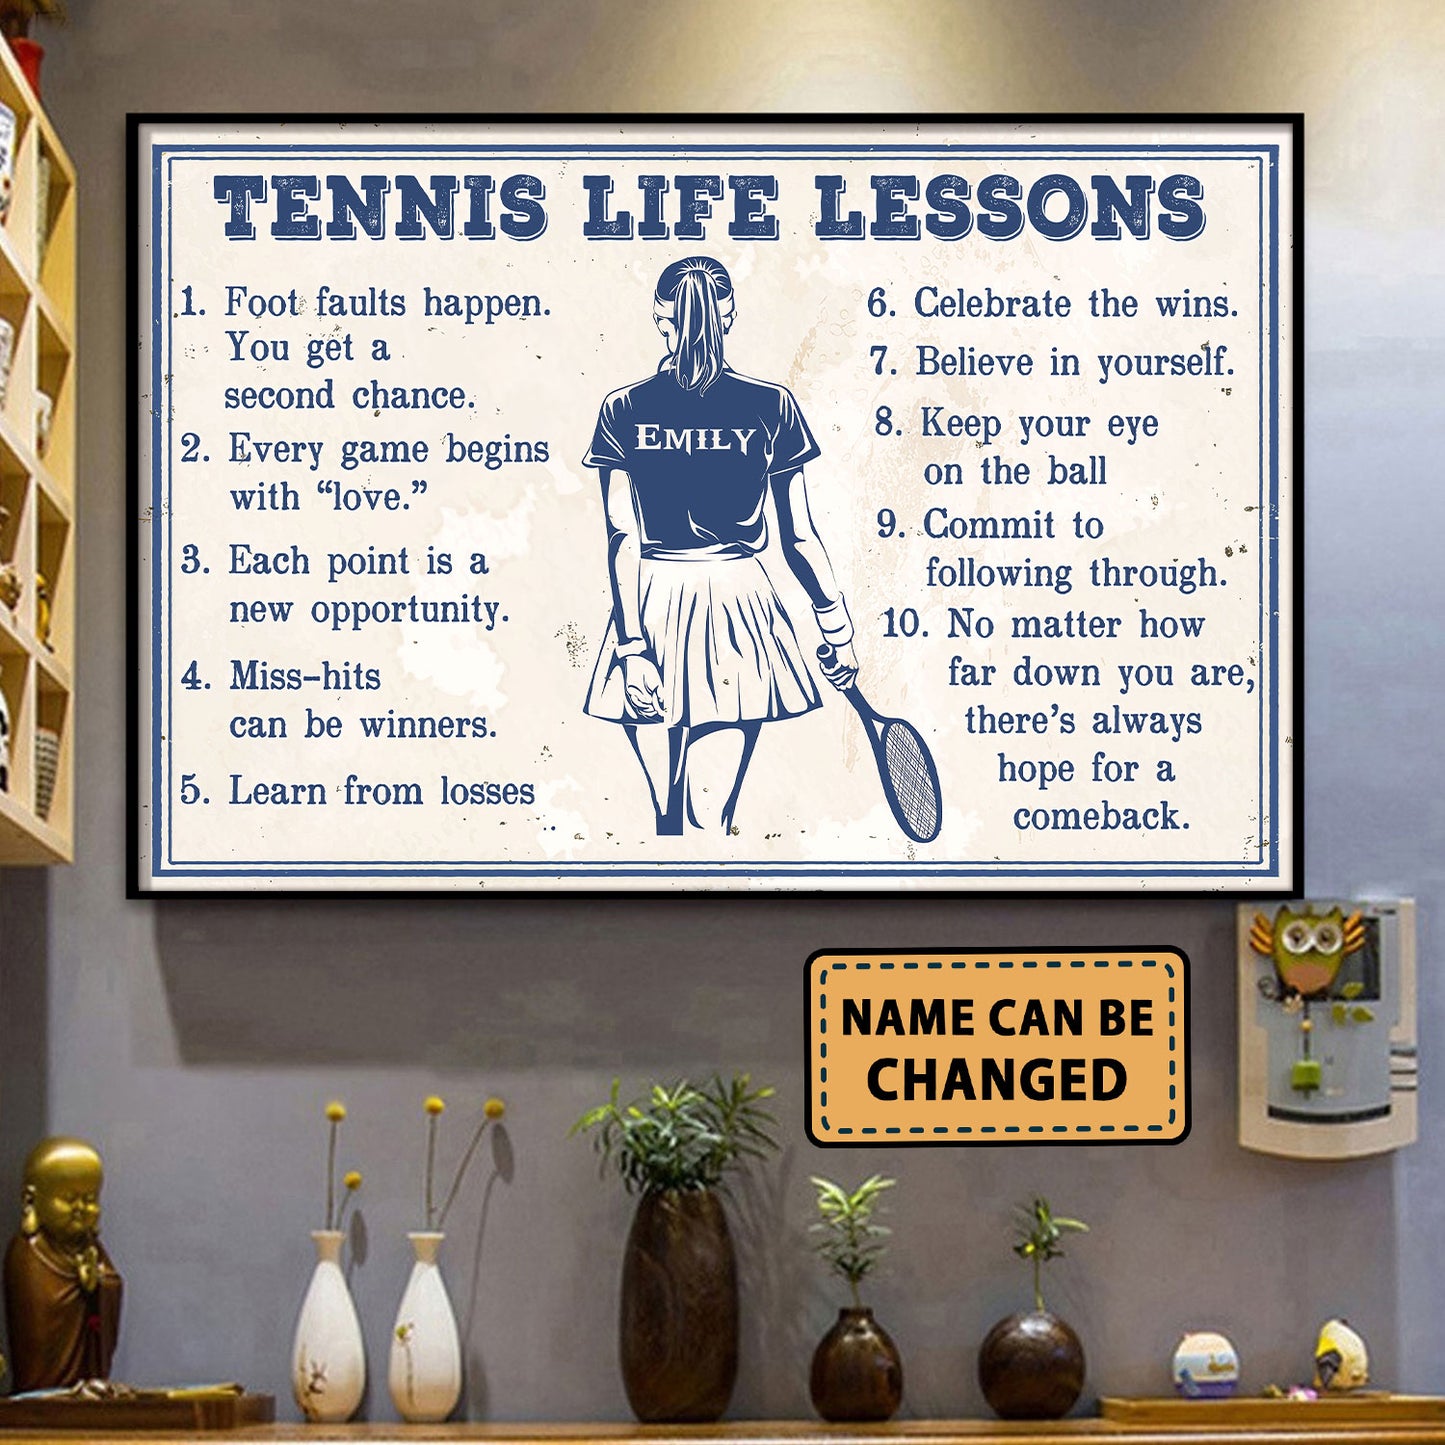 Tennis Life Lessons